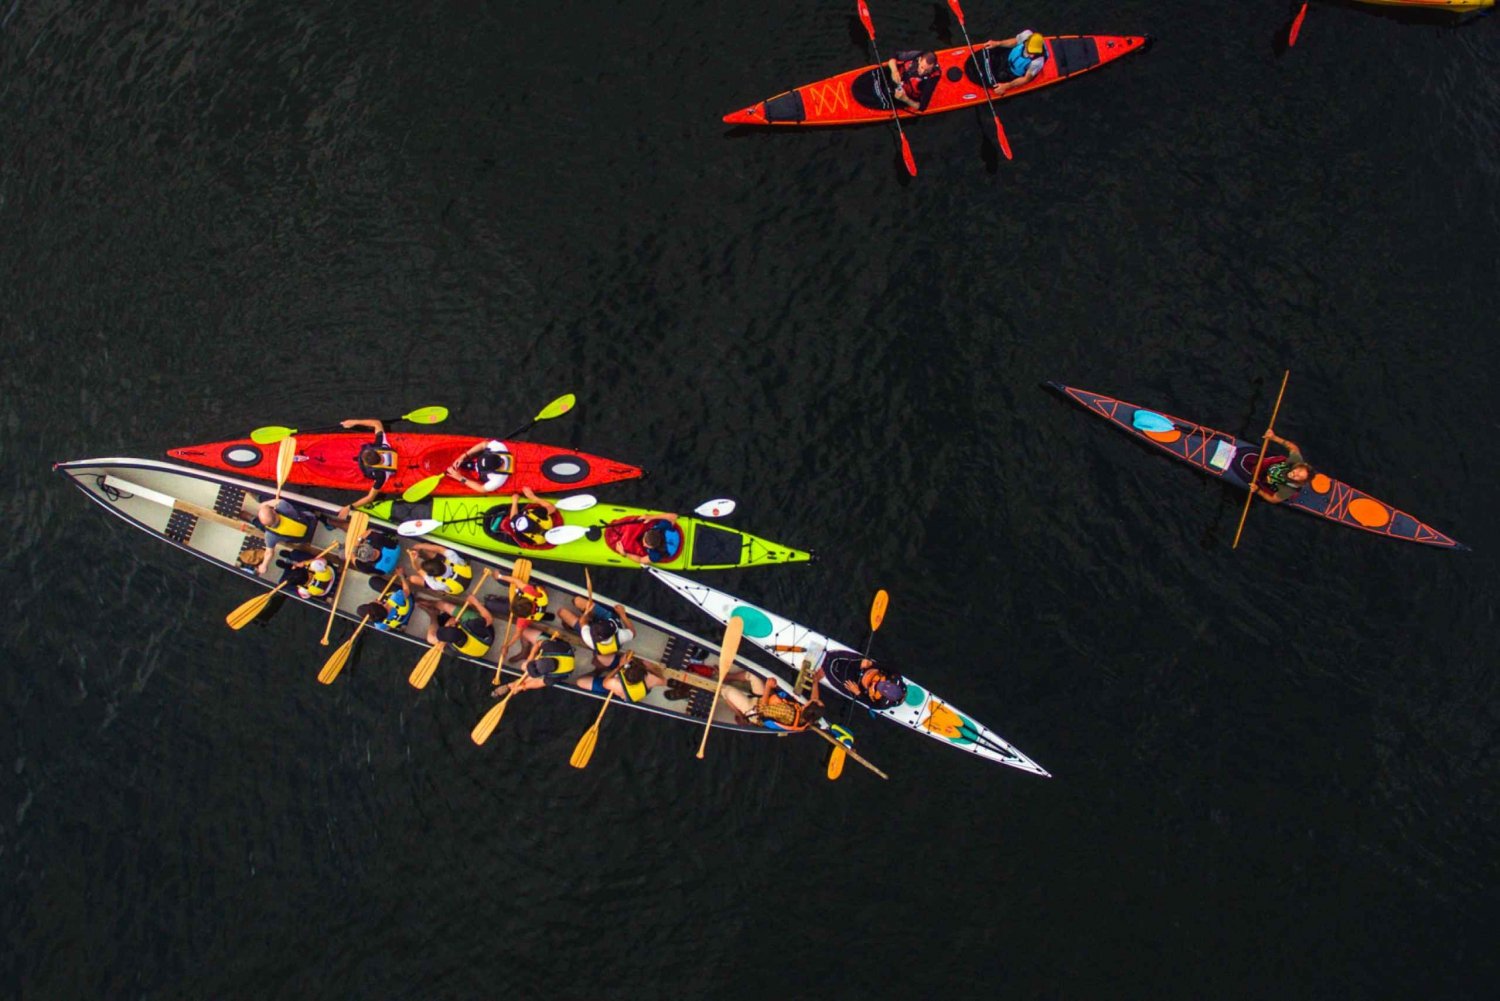 From Vaxholm: Stockholm Archipelago Big Canoe Adventure